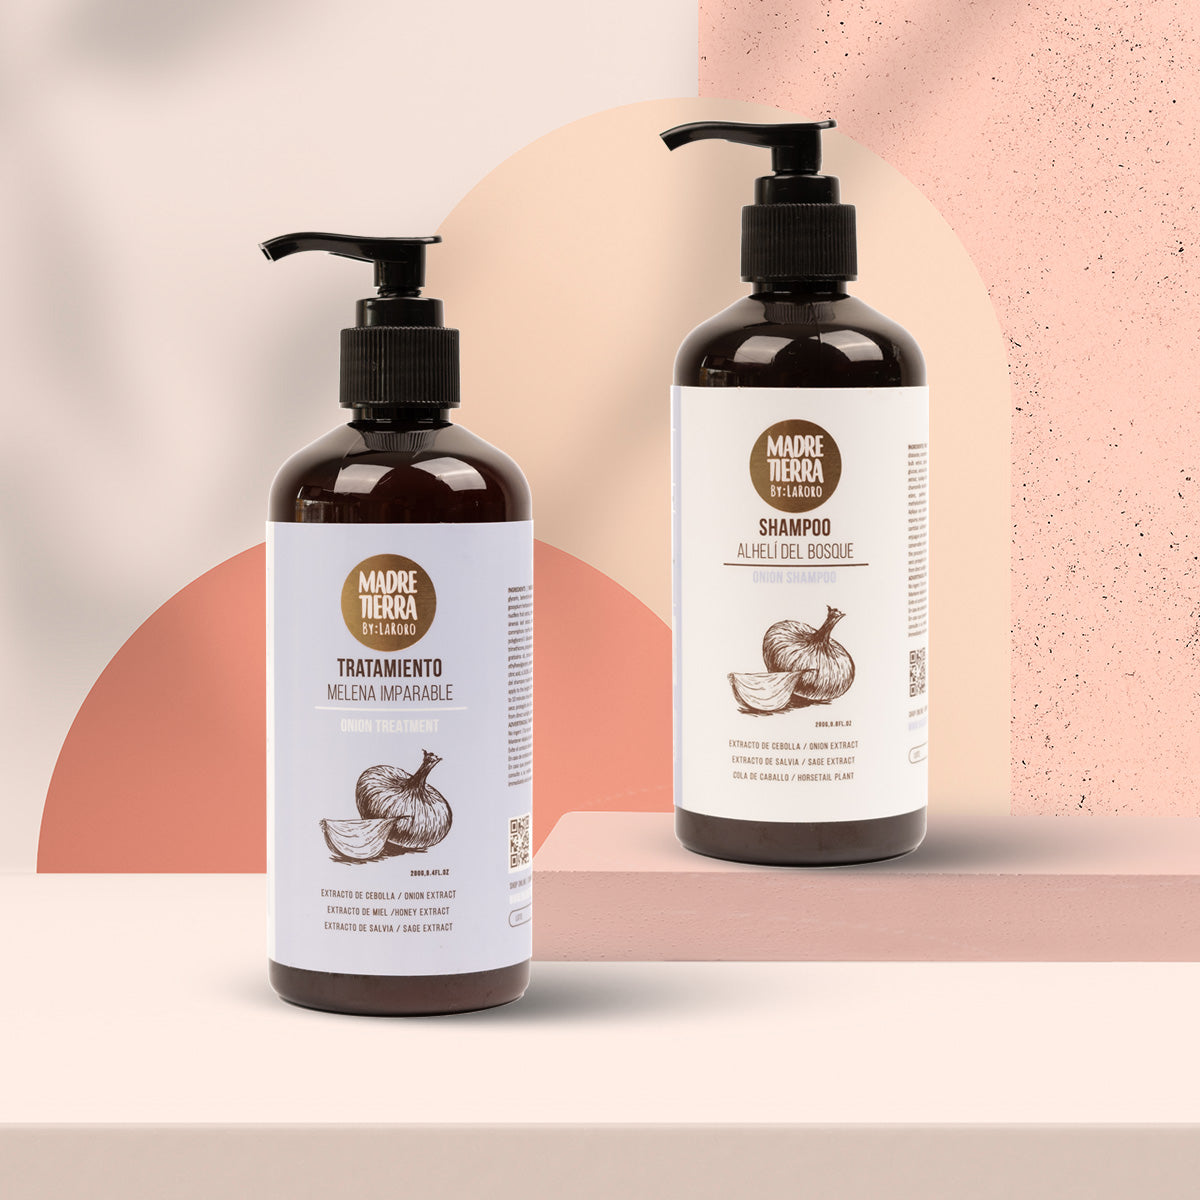 Shampoo Alhelí del Bosque + Tratamiento Melena Imparable - Madre Tierra Oficial